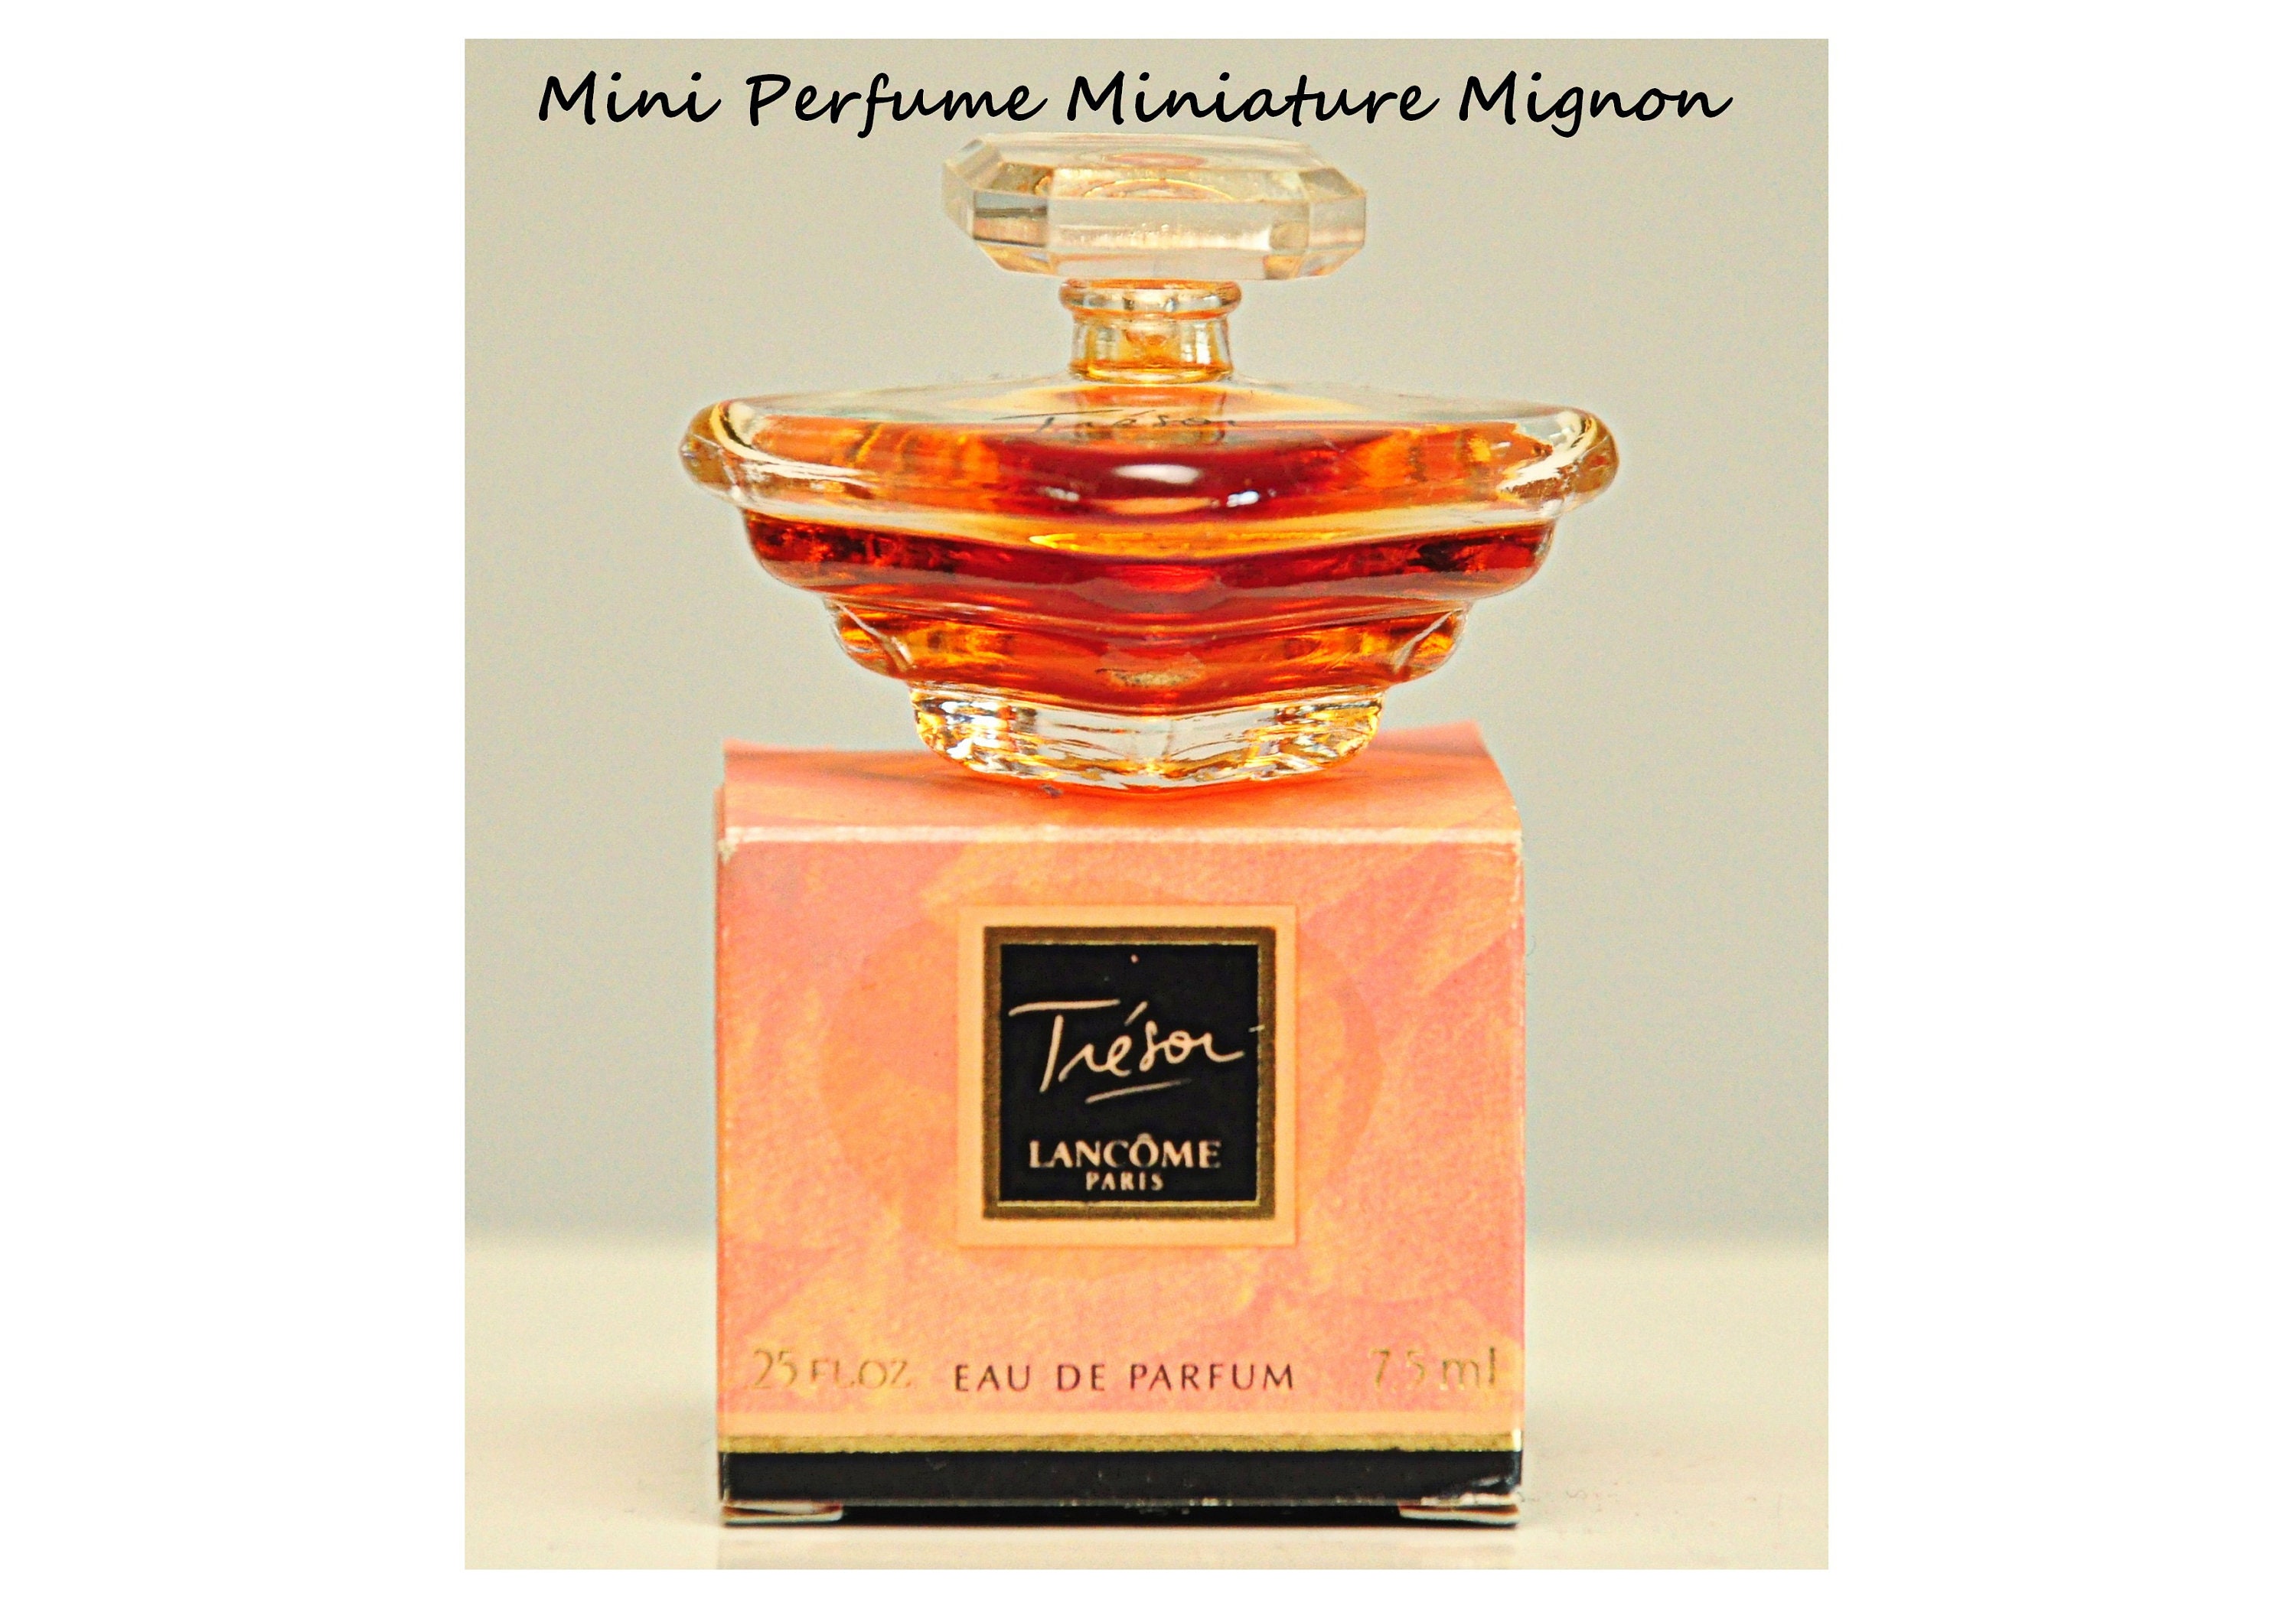 Lancome Tresor Eau De Parfum Edp 7,5ml 0,25 Fl. Oz. Miniature